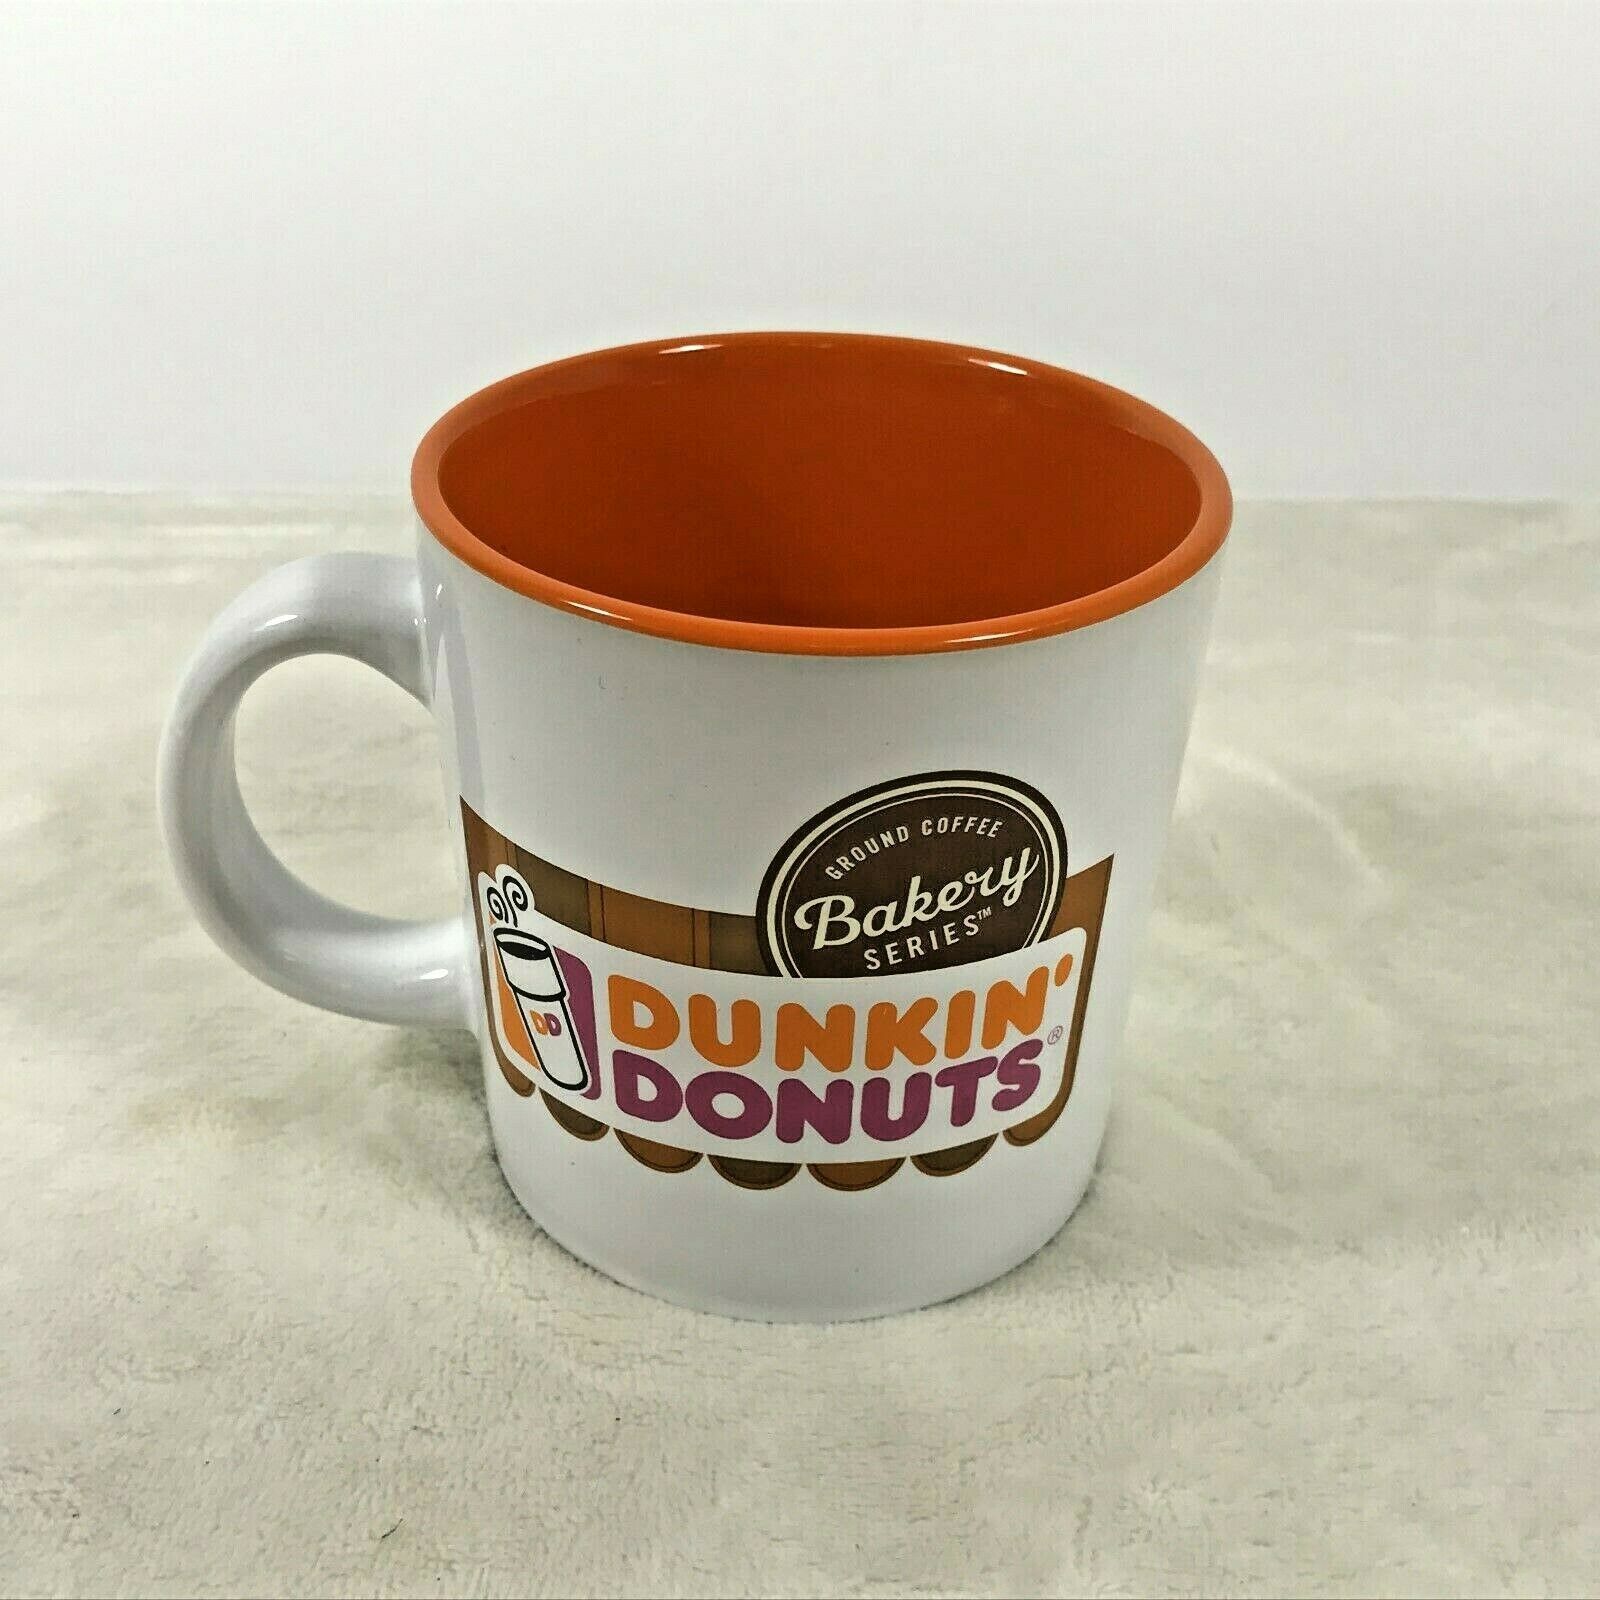 Dunkin Donuts Coffee Mug Bakery Series Mugs, Cups